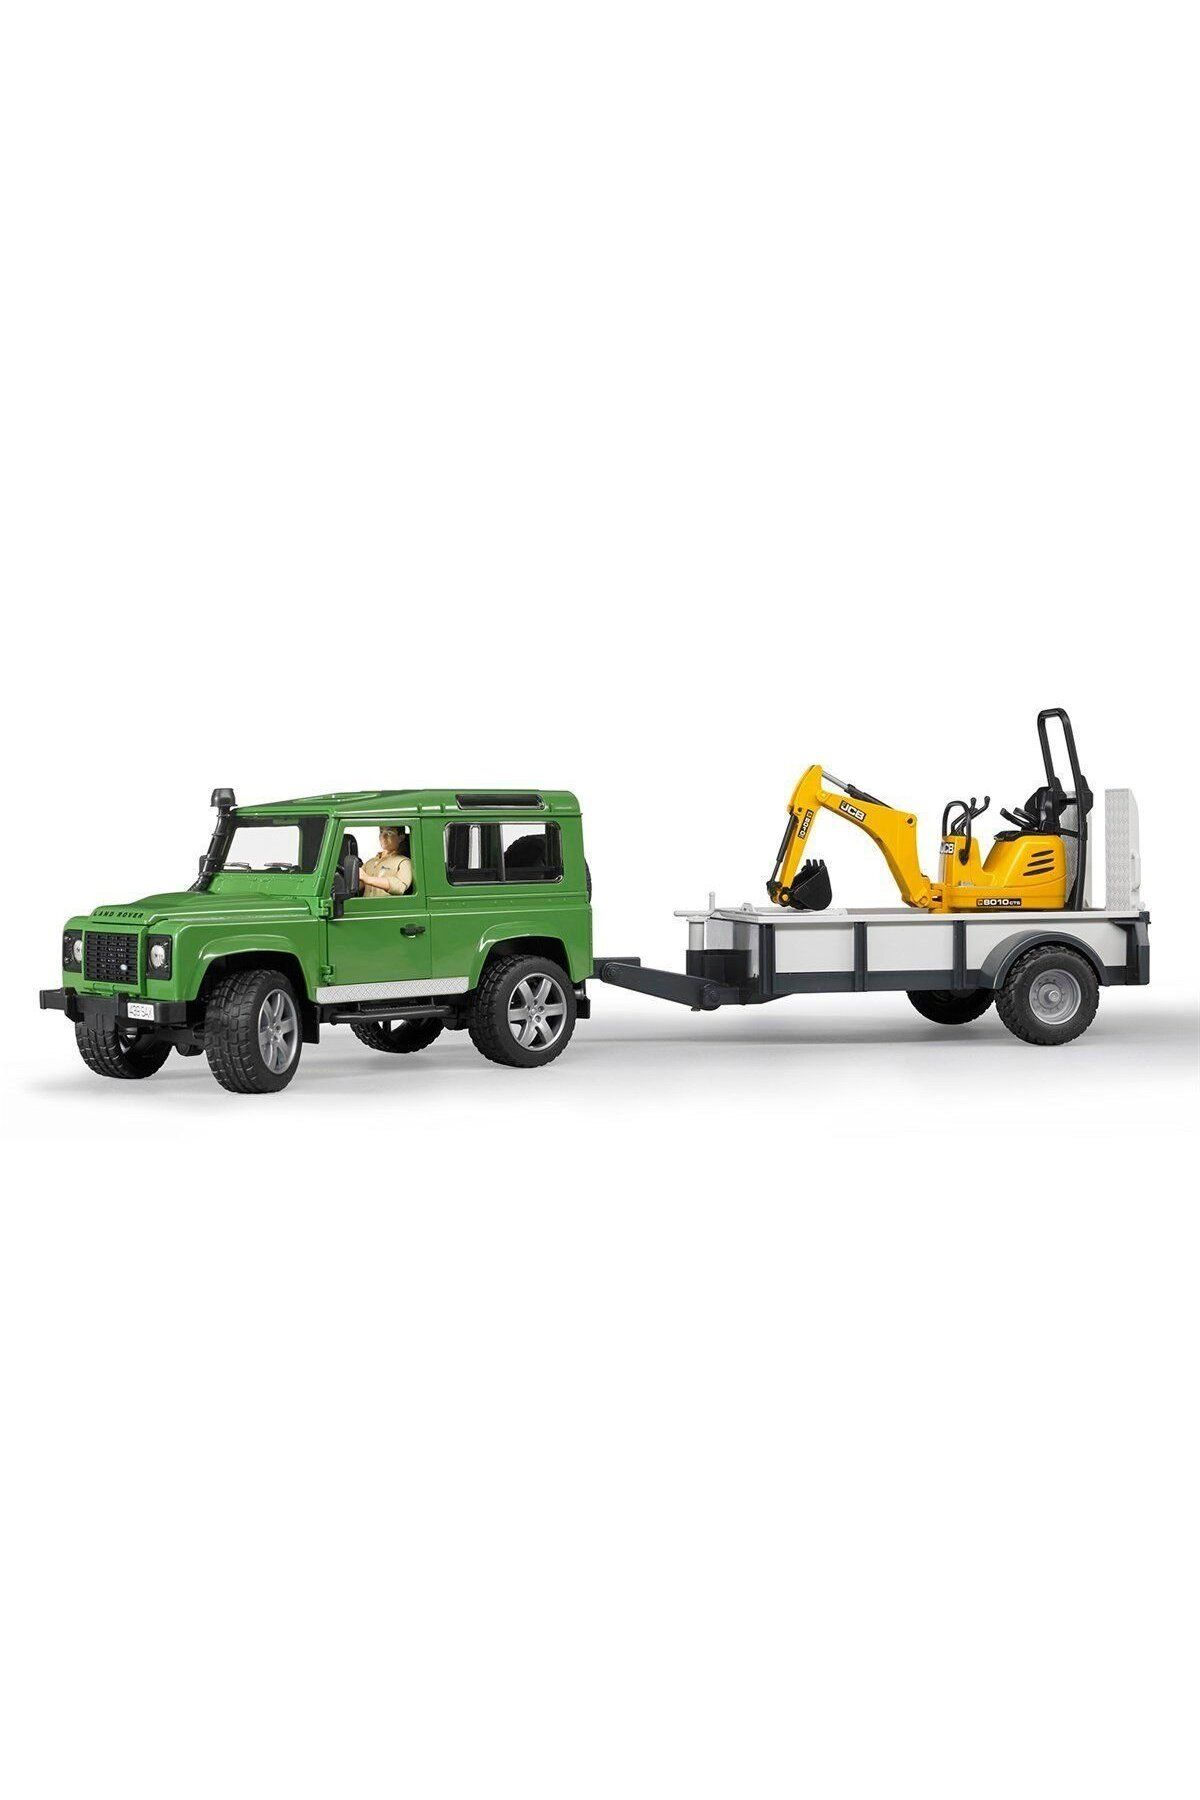 Genel Markalar Mlvx Br02593 Land Rover Arazi Aracı Ve Jcb Mini Kazıcı Mlv  Blsm